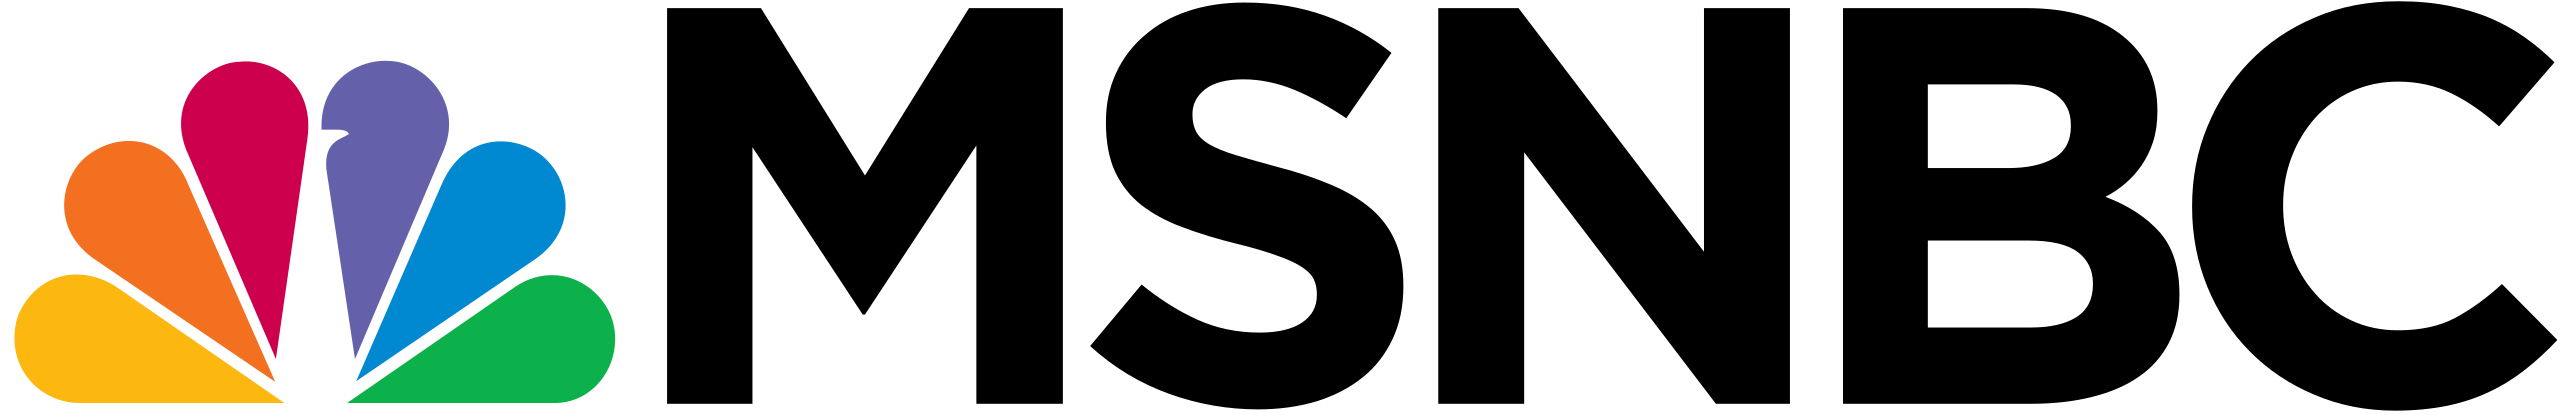 MSNBC 2015 2021 logo.svg